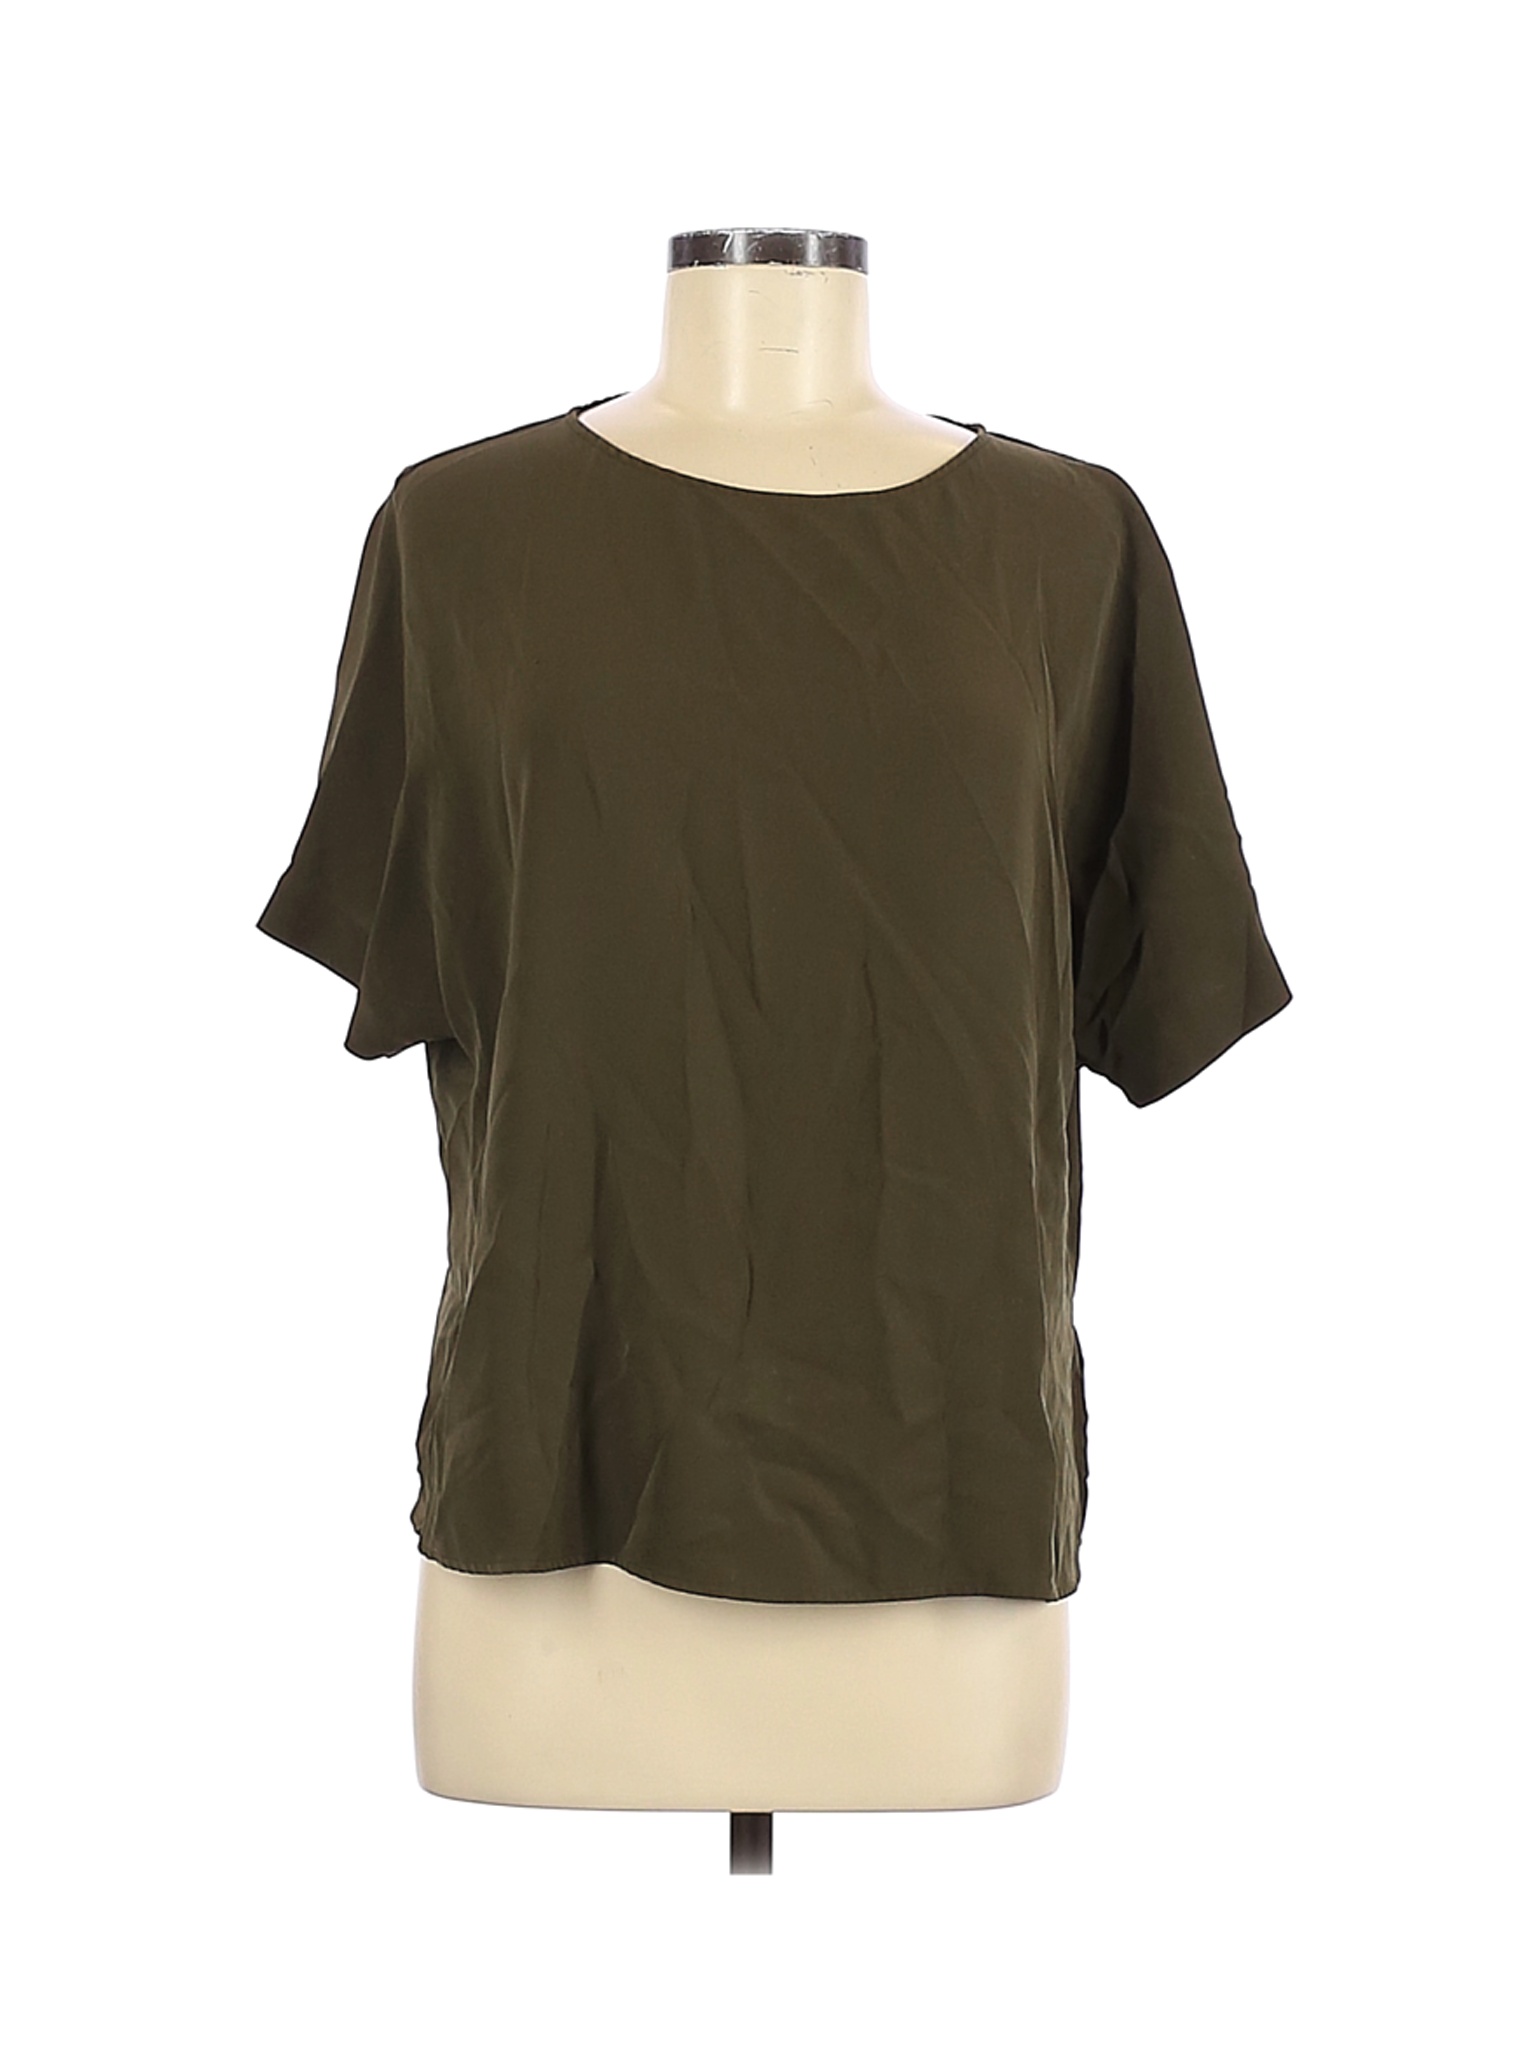 Uniqlo Women Green Short Sleeve Blouse S | eBay